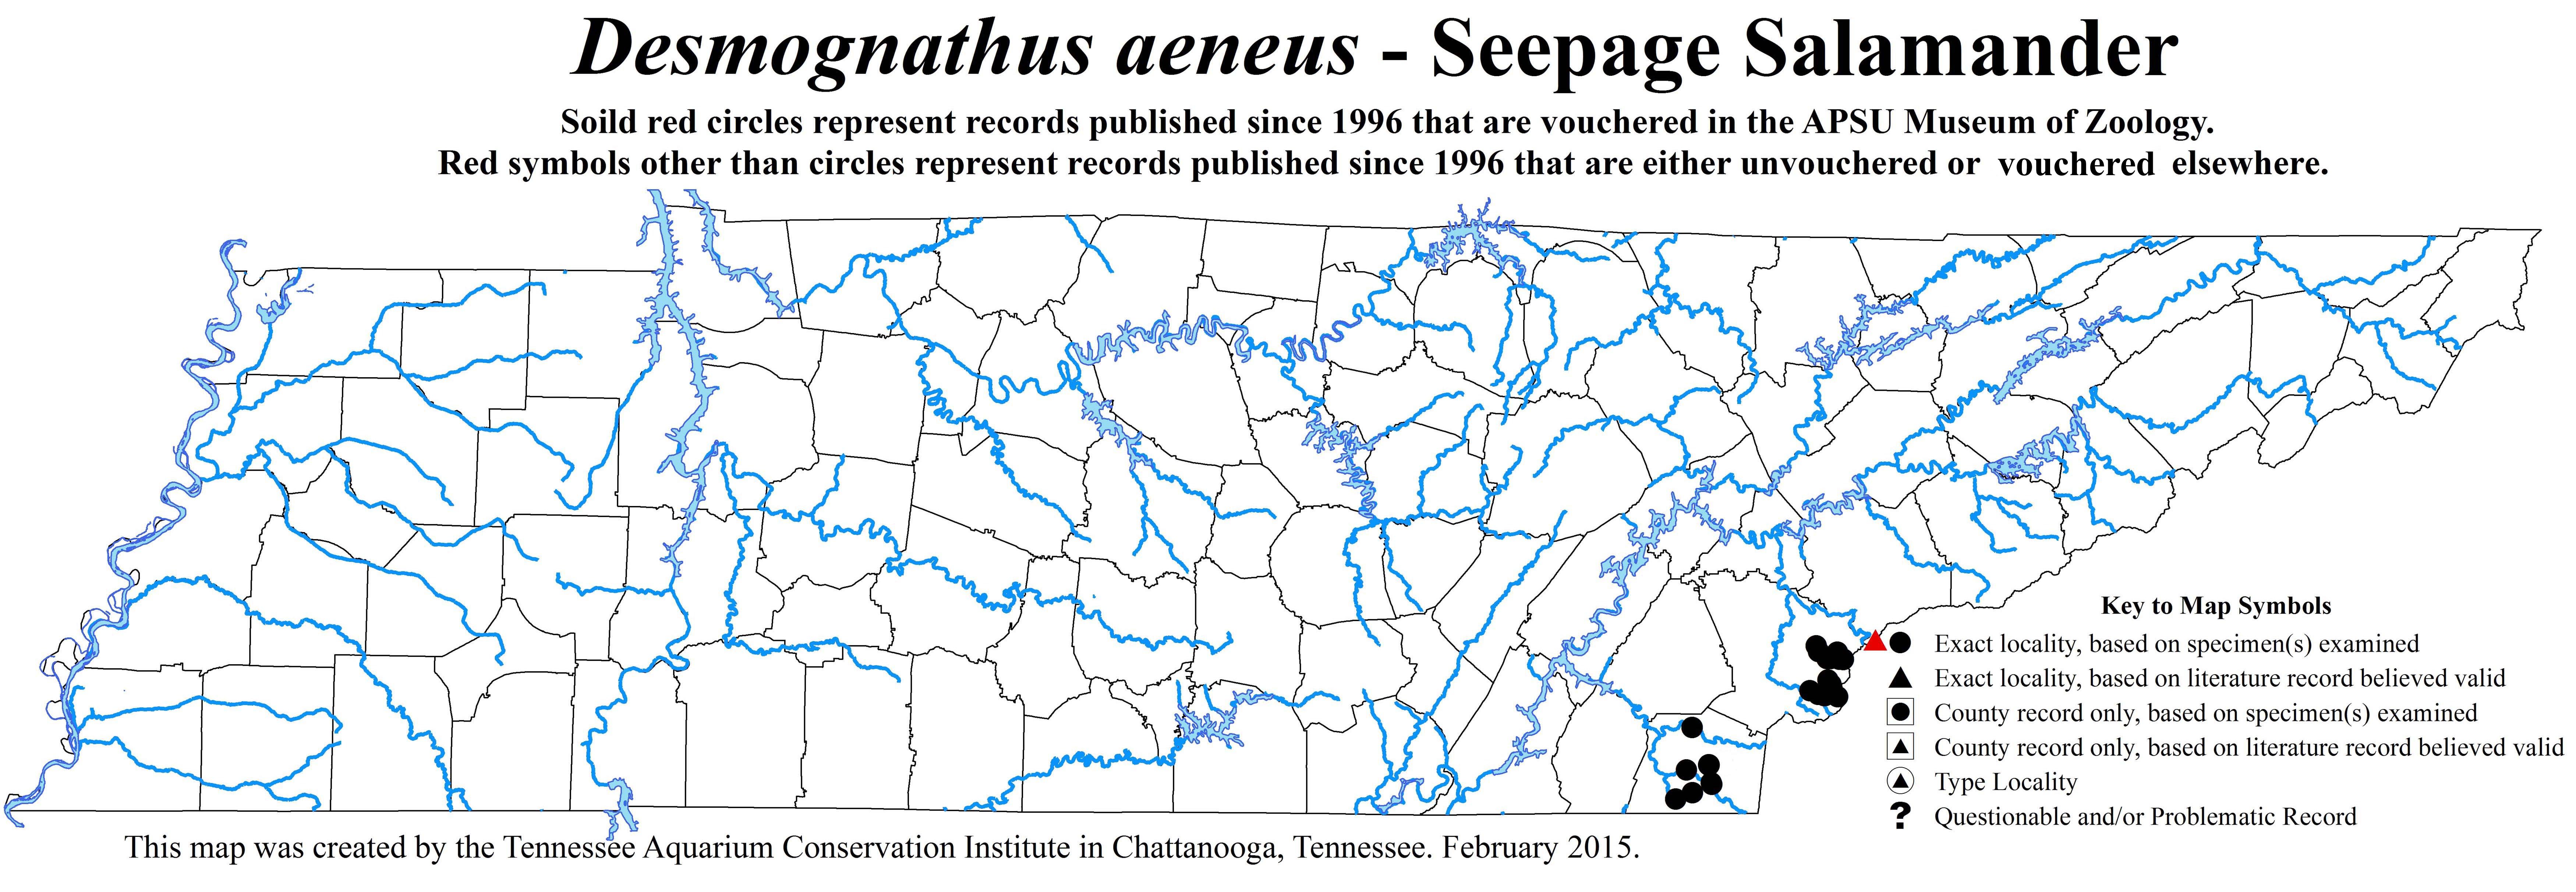 New Distribution Map - Desmognathus aeneus Bishop and Brown - Seepage 
Salamander